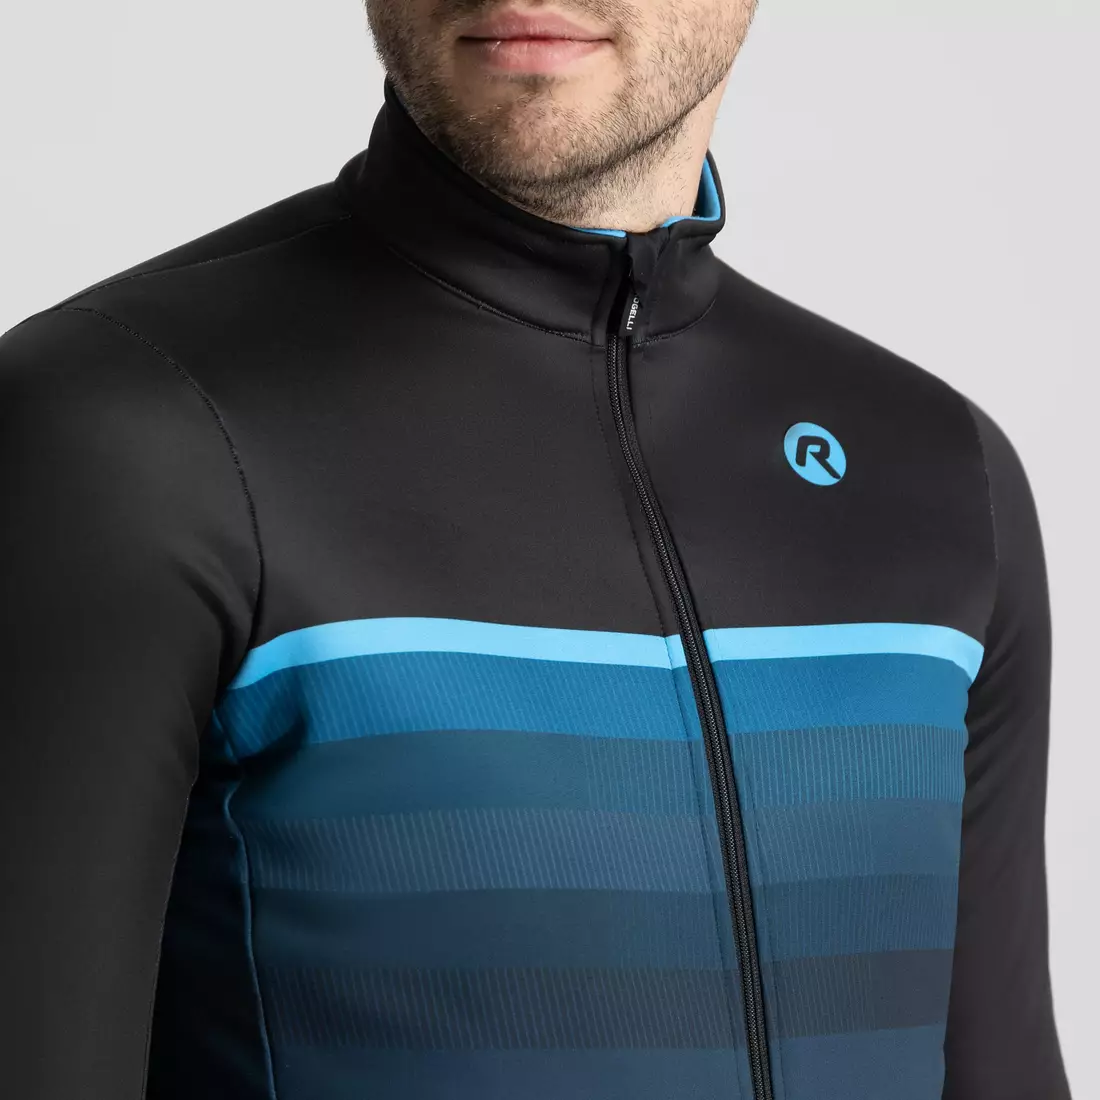 Rogelli winter cycling jacket HERO II, black and blue